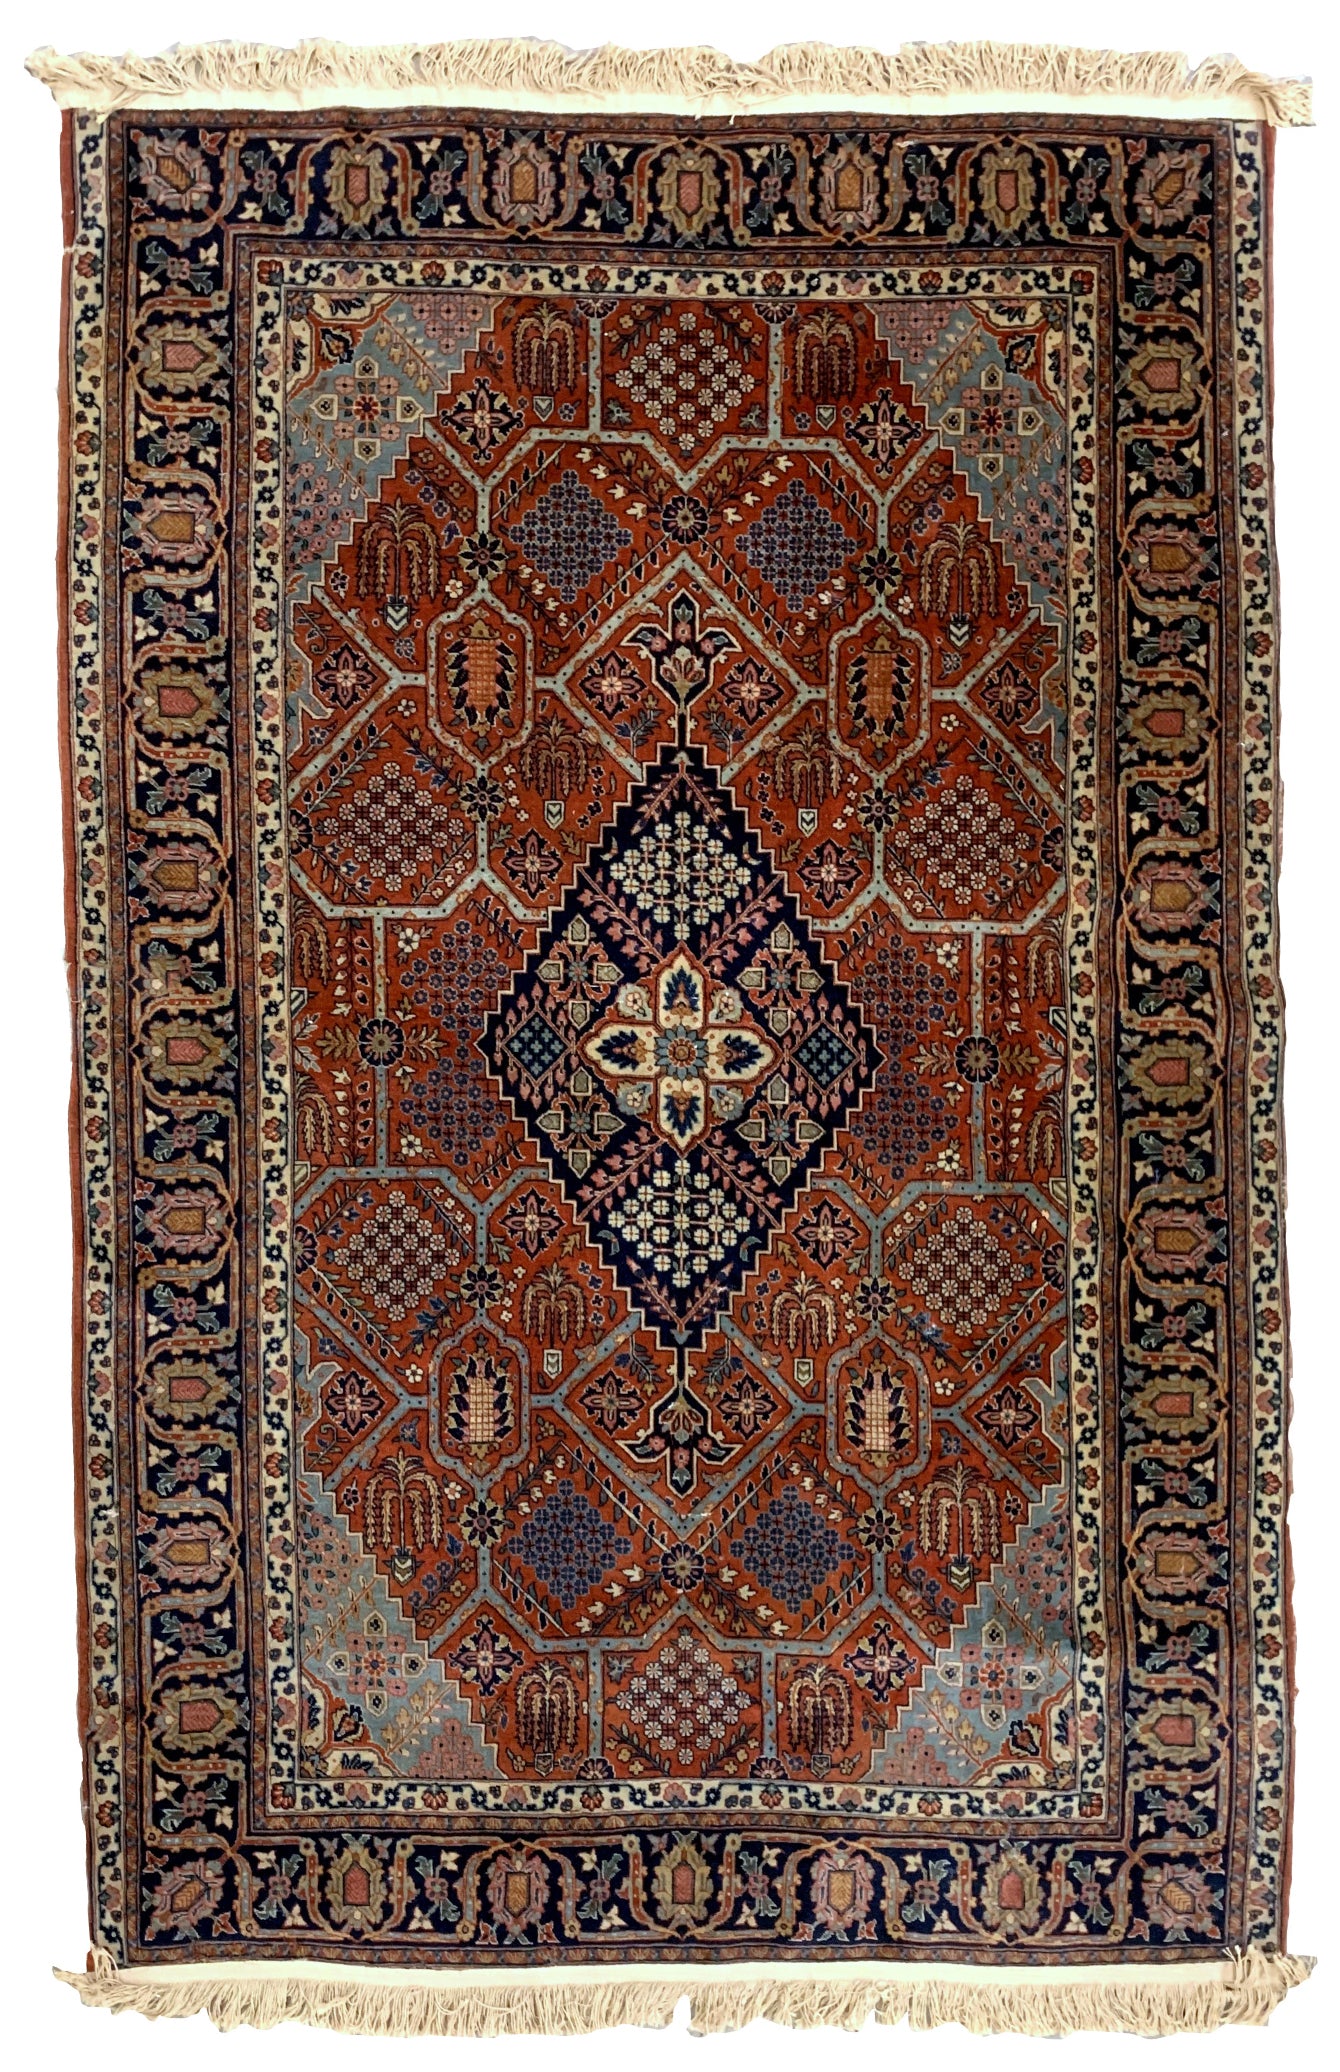 Handmade antique Persian Jozan rug 1920s